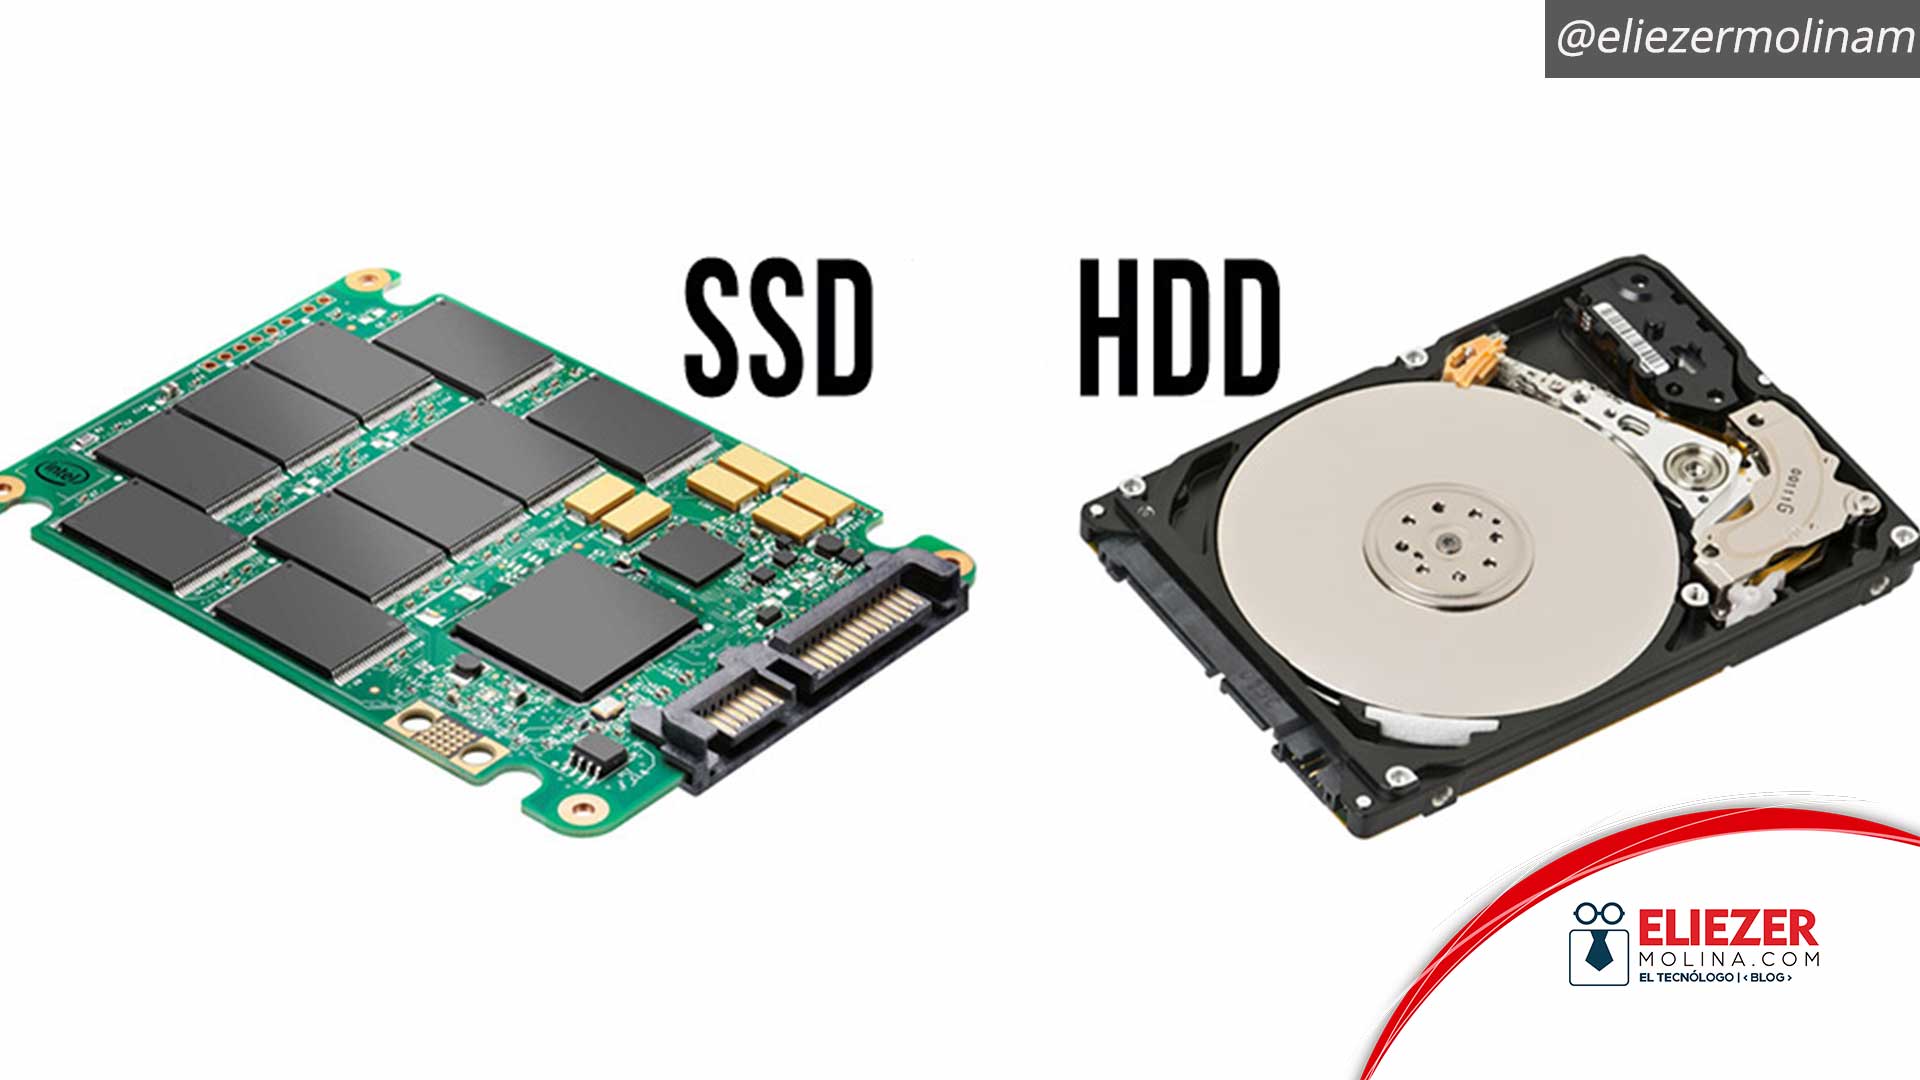 Cual elegir? SSD vs HDD - Eliezer Molina